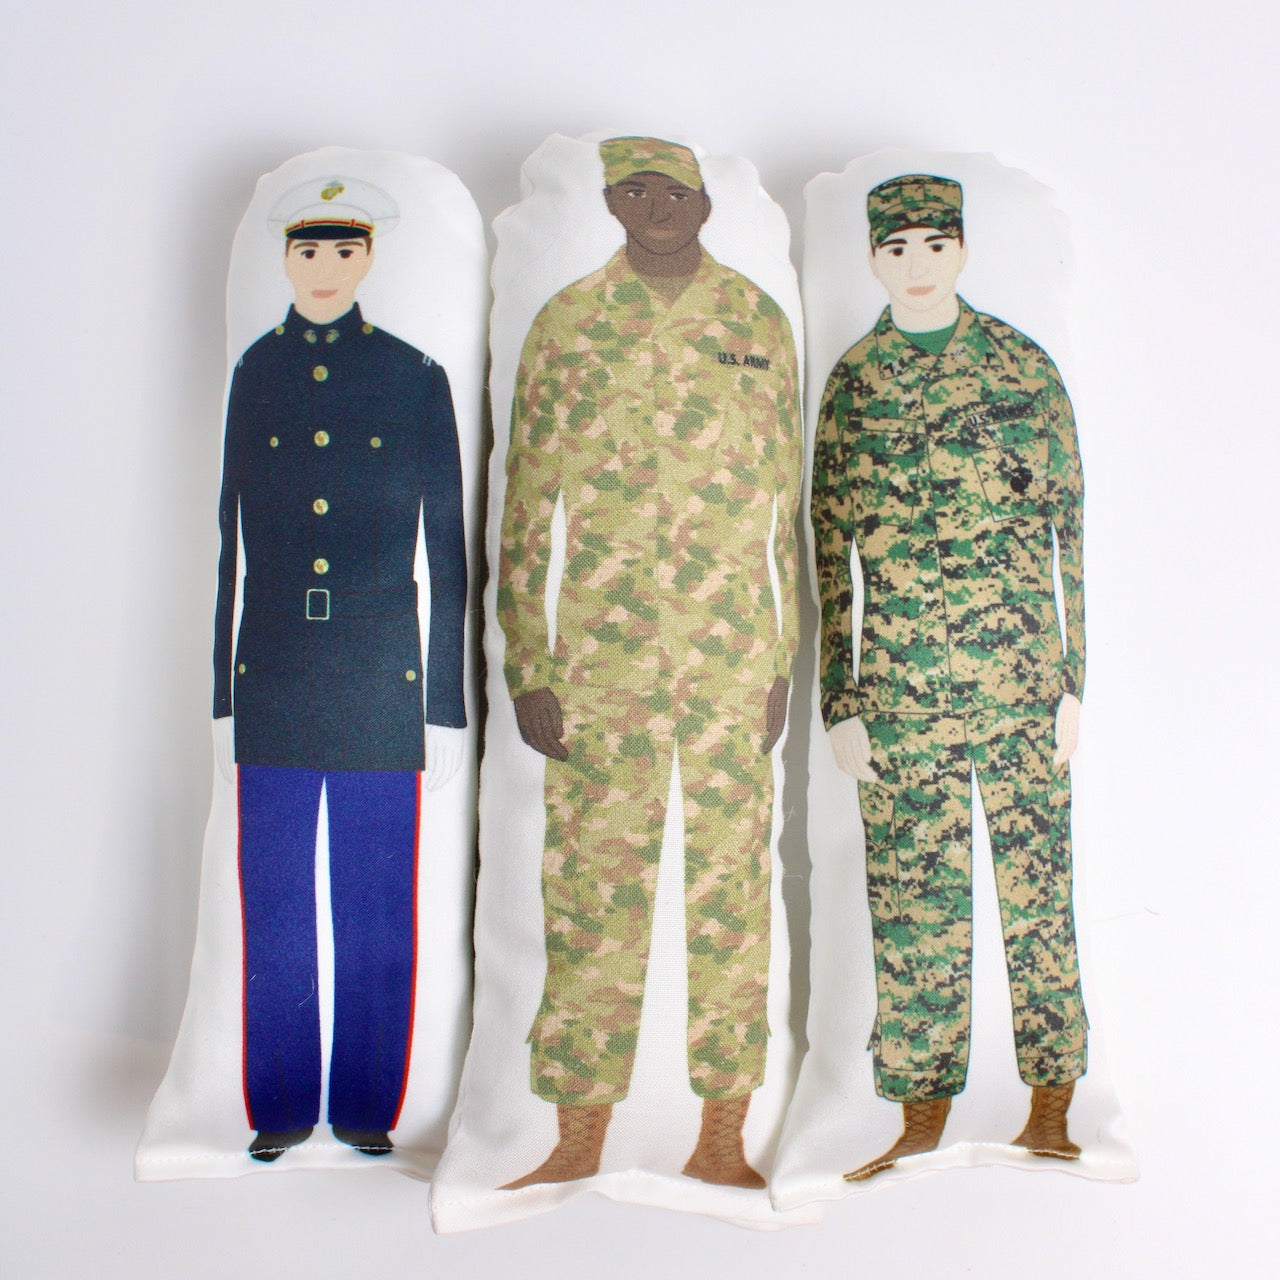 Military Plush Dolls